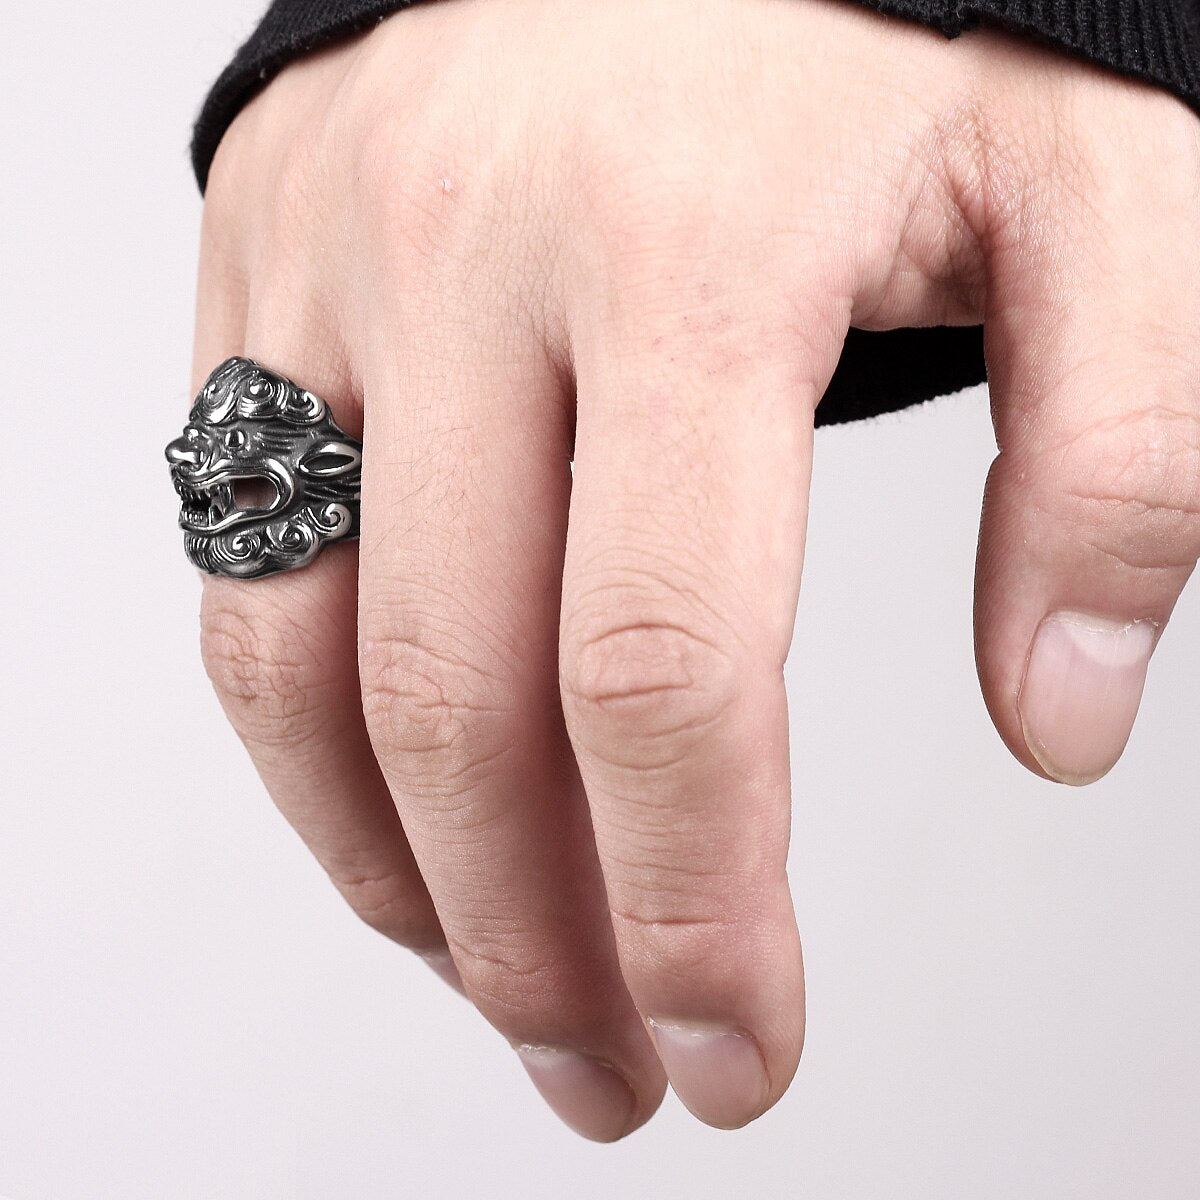 Stainless Steel Men Rings Chinese Style God Beast Kirin Amulet Punk Rock for Male Boyfriend Jewelry Creativity Gift